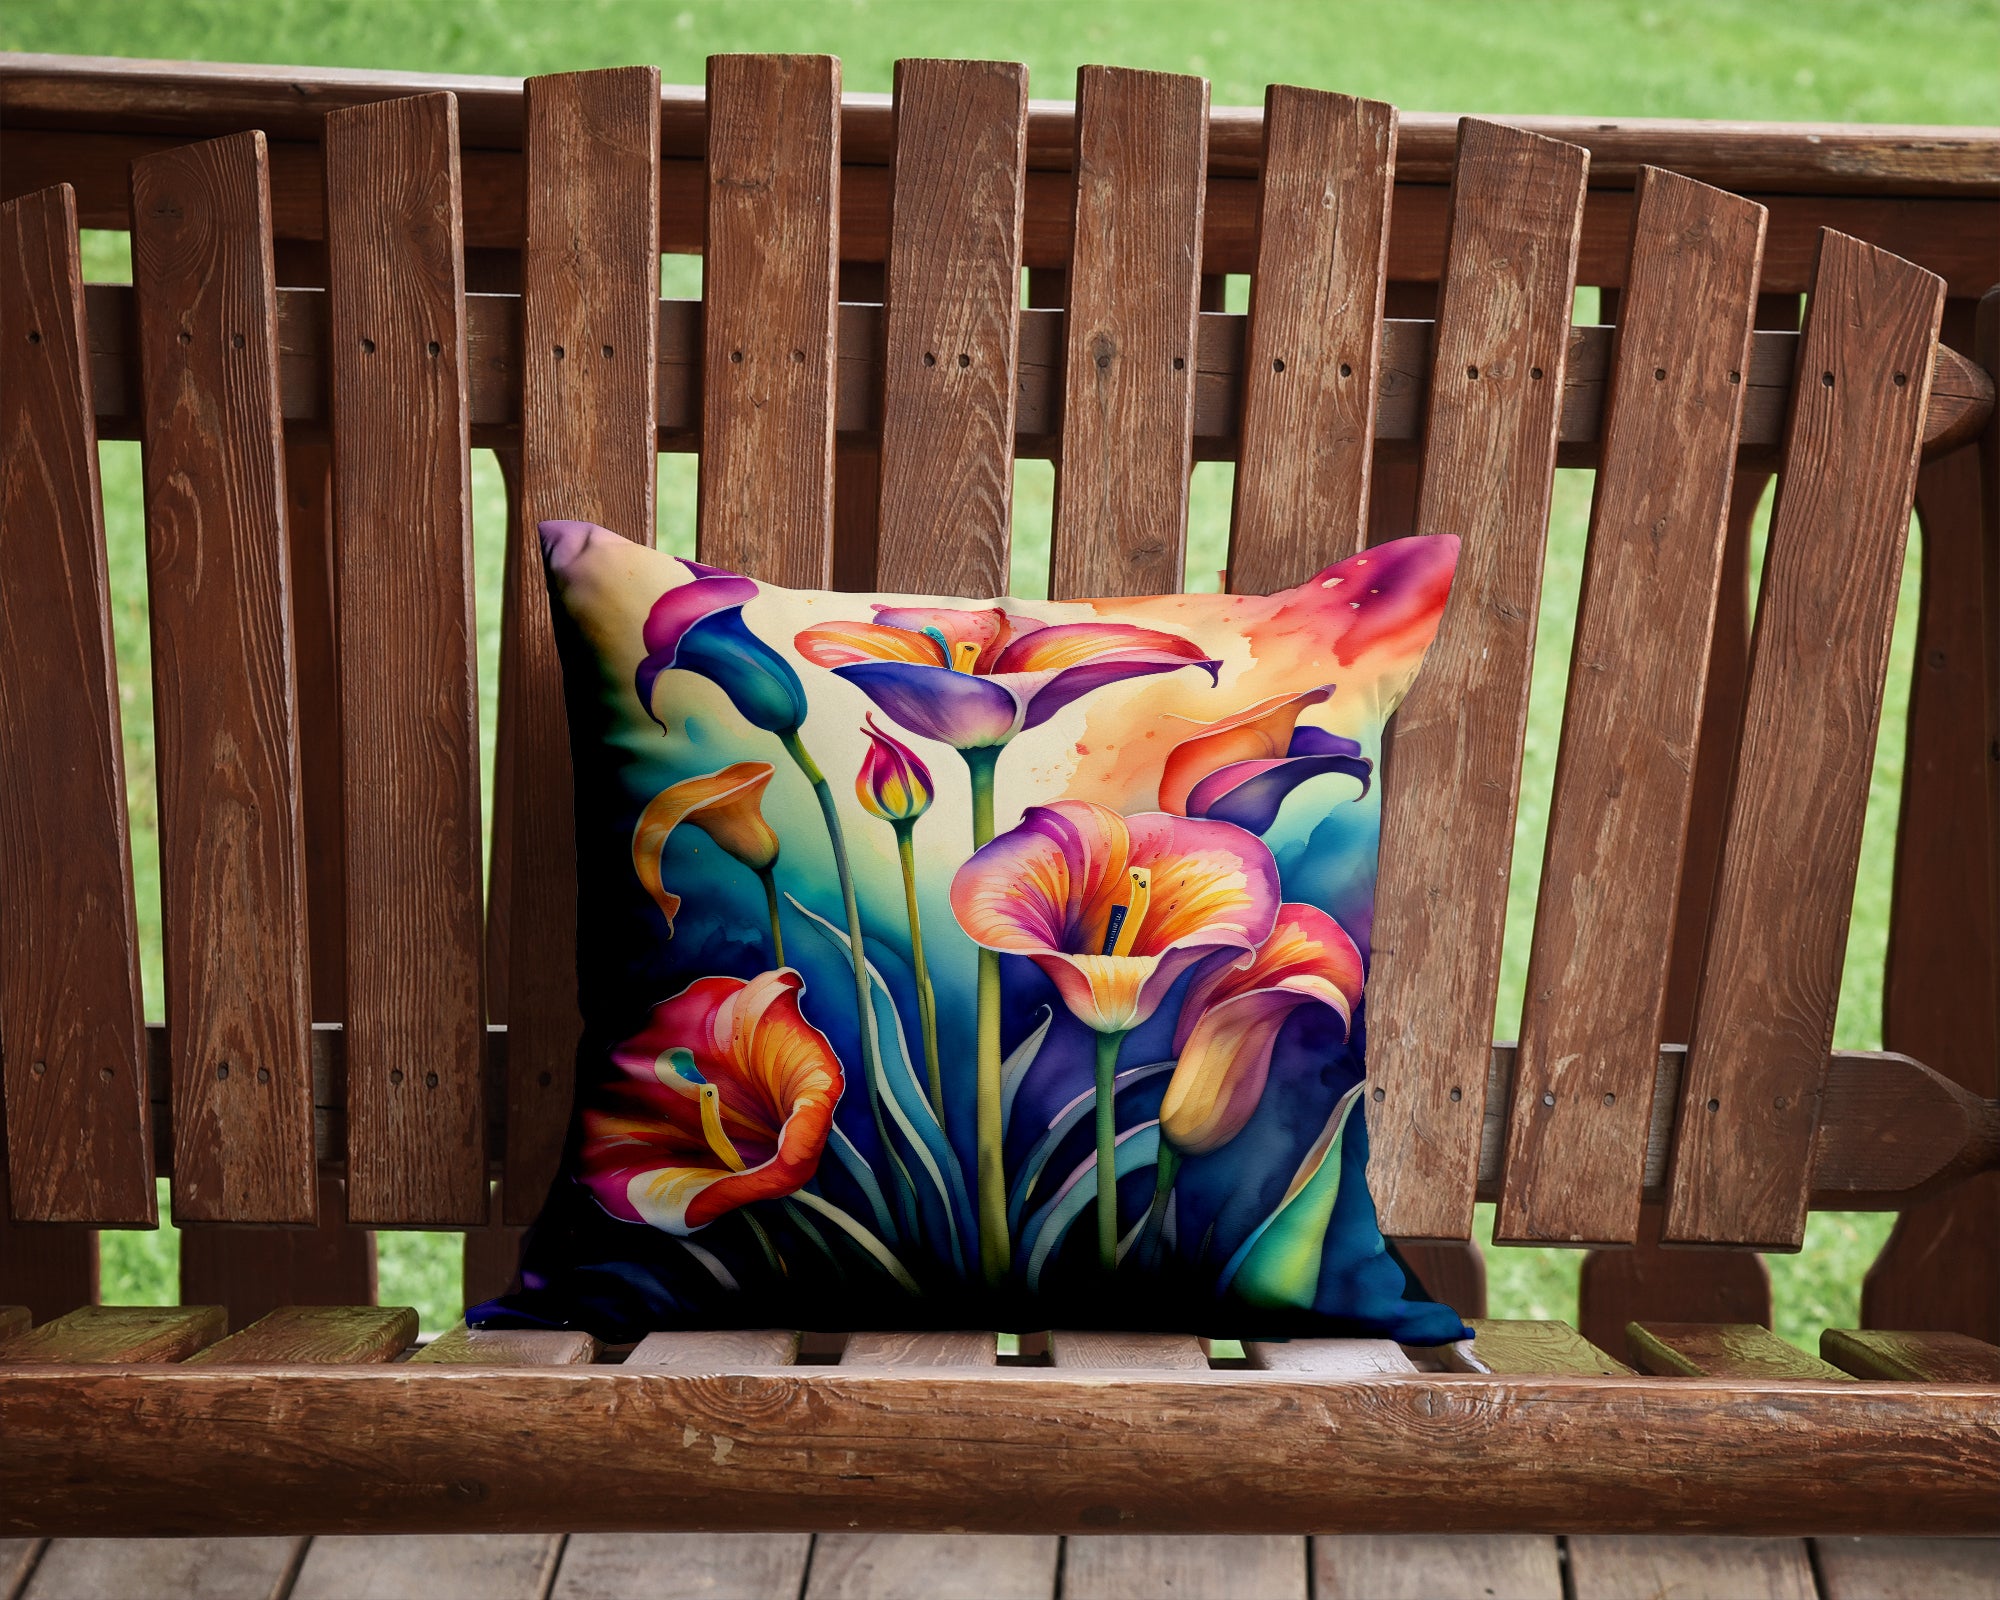 Colorful Calla Lilies Fabric Decorative Pillow